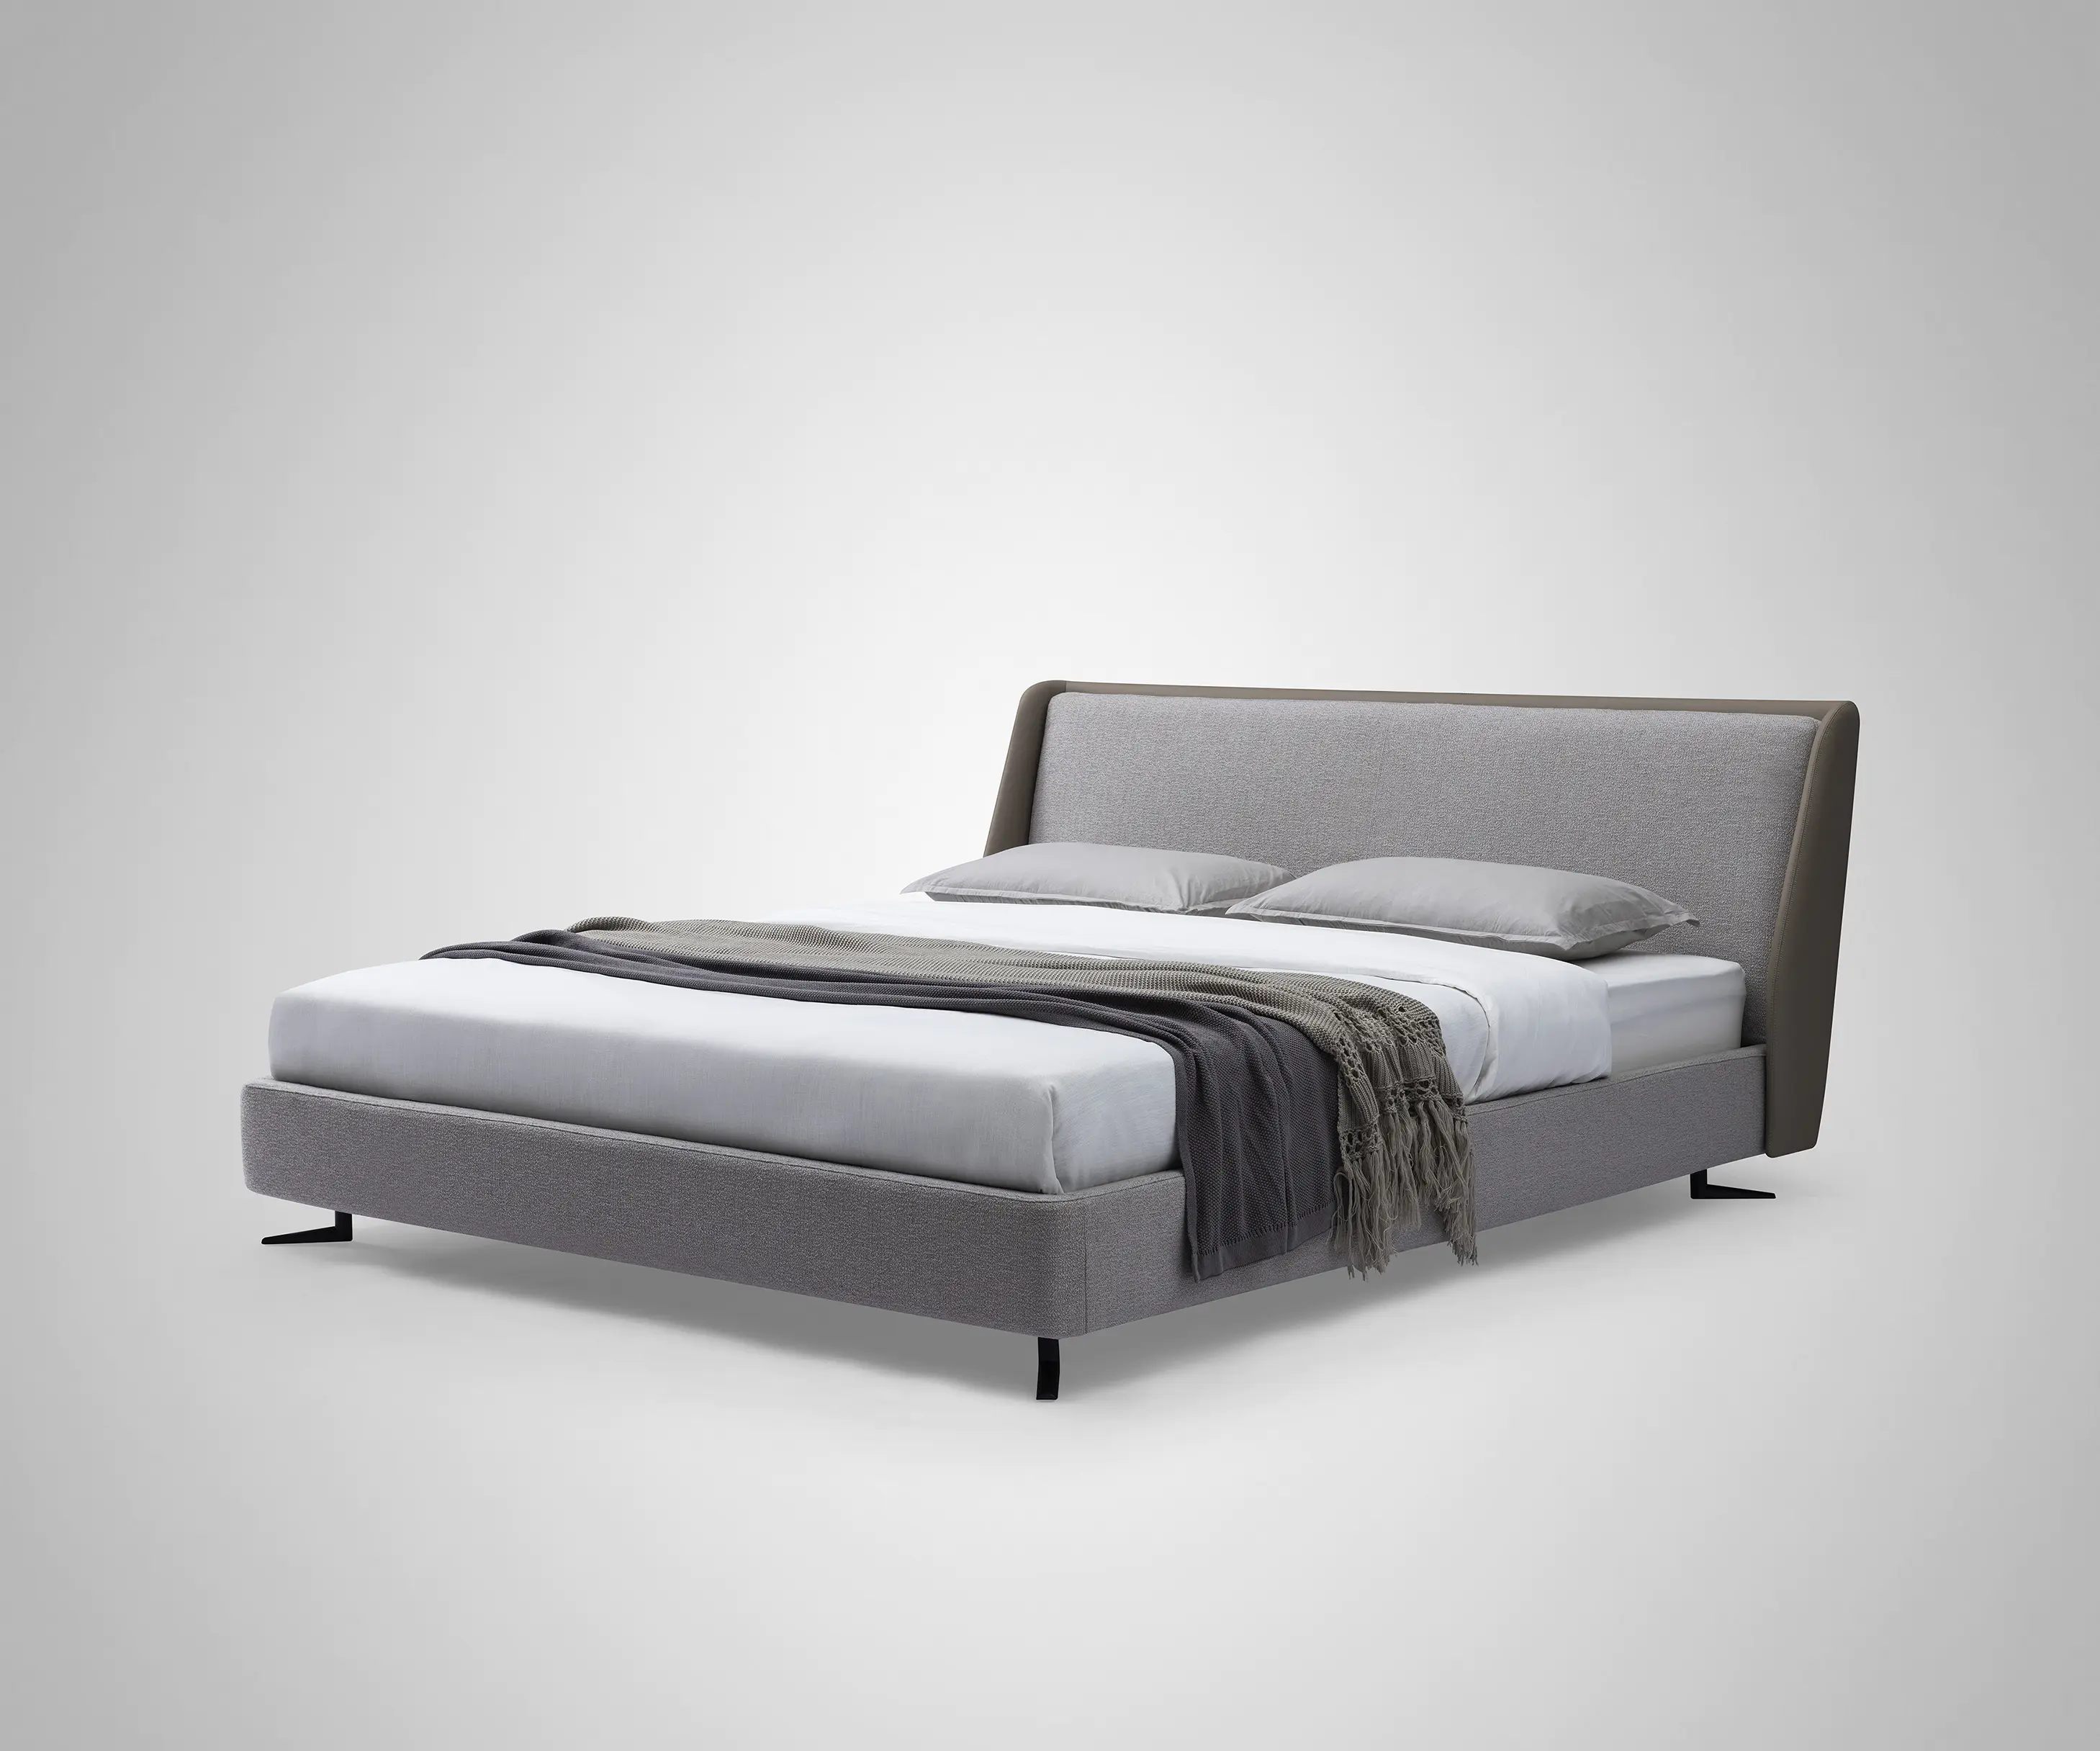 Comfortable Home Bed Elegant King Size Bed